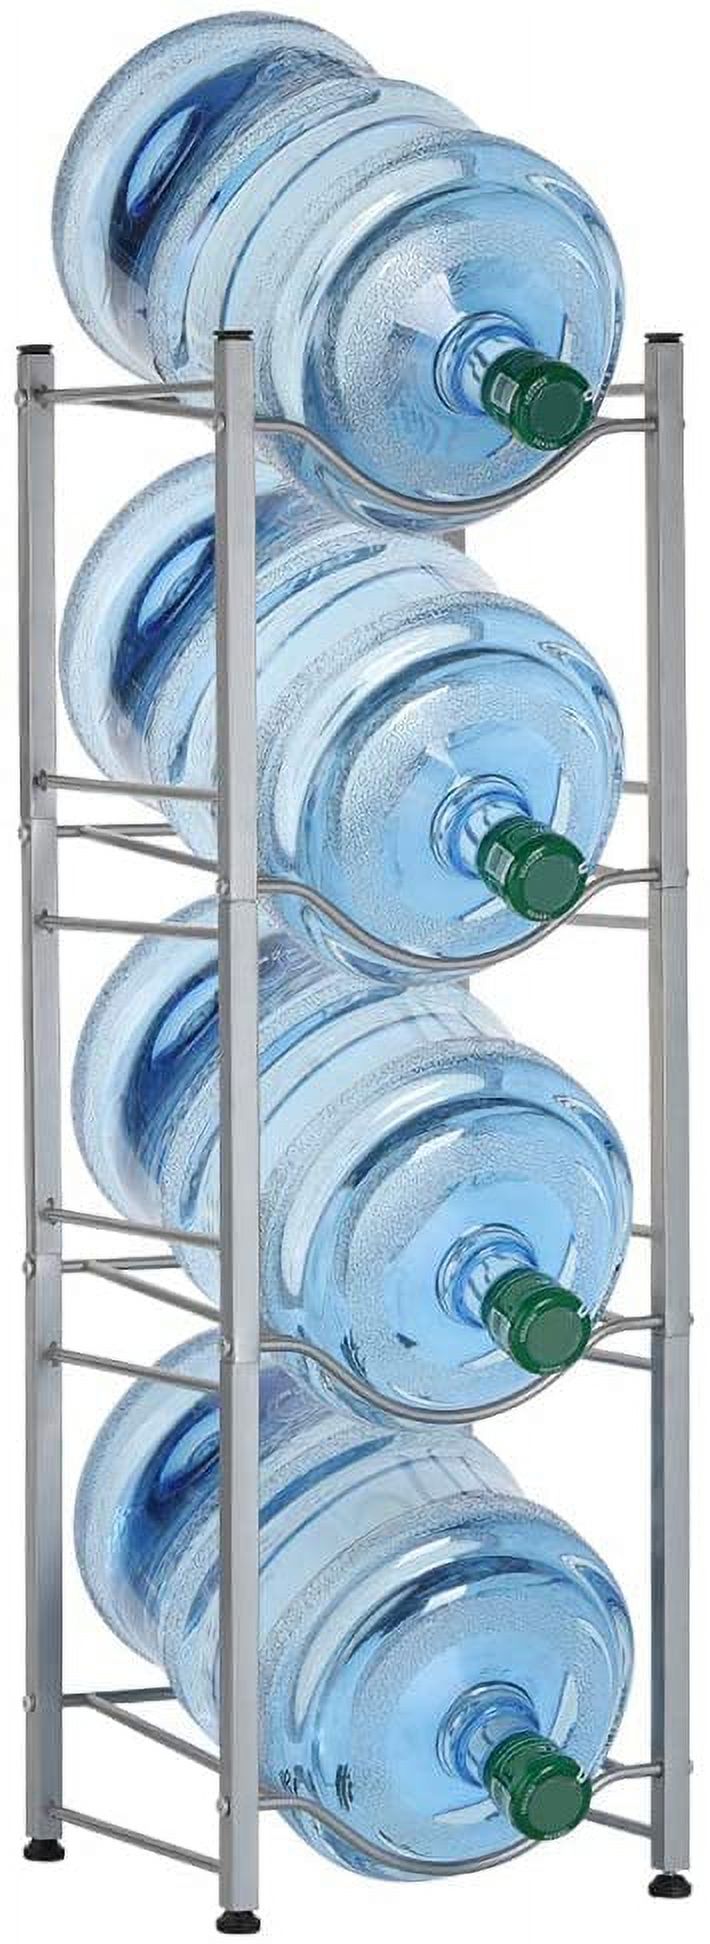 5 Gallon Water Jug Holder Water Bottle Storage Rack, 4 Tiers, Silver - image 1 of 7